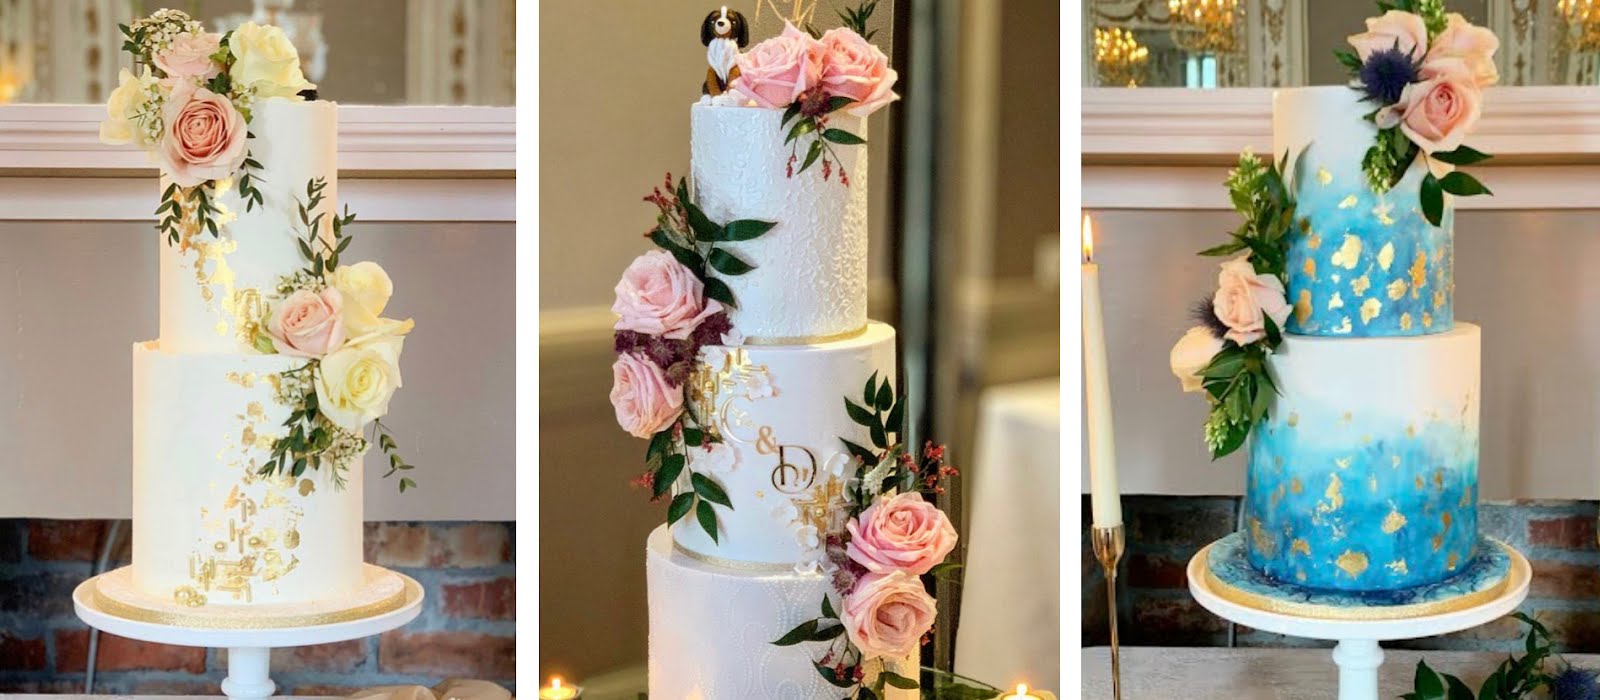 The 50 Most Beautiful Wedding Cakes | Beautiful wedding cakes, Pretty  wedding cakes, Colorful wedding cakes